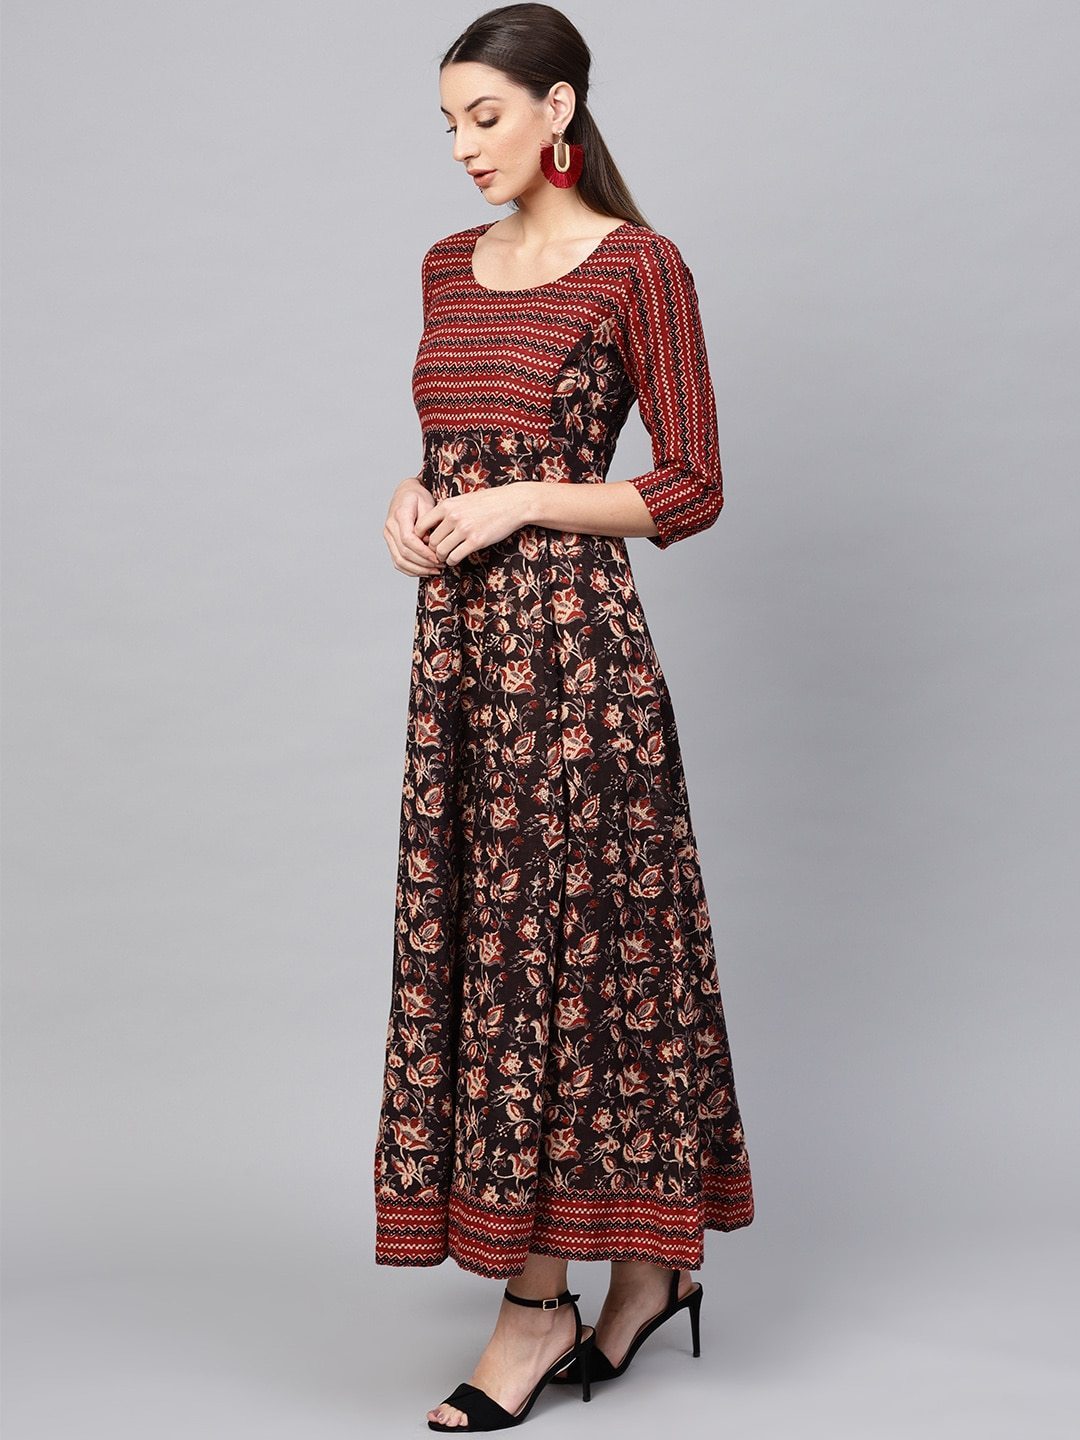 Women's  Brown & Beige Printed Maxi Dress - AKS